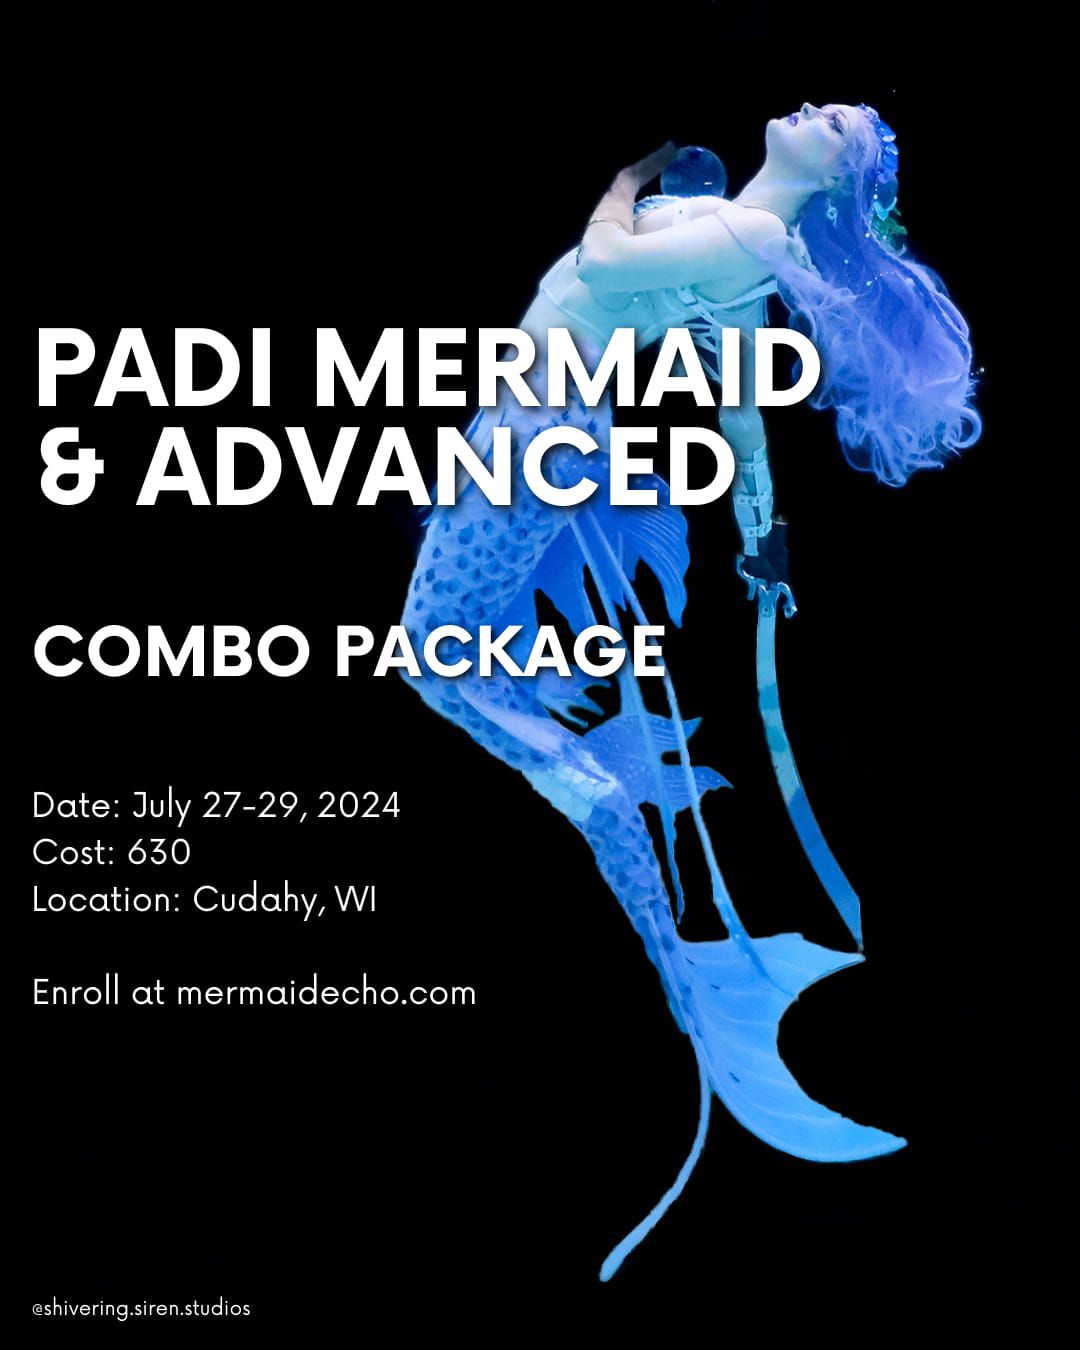 PADI Mermaid & Advanced Combo Package June 1-2